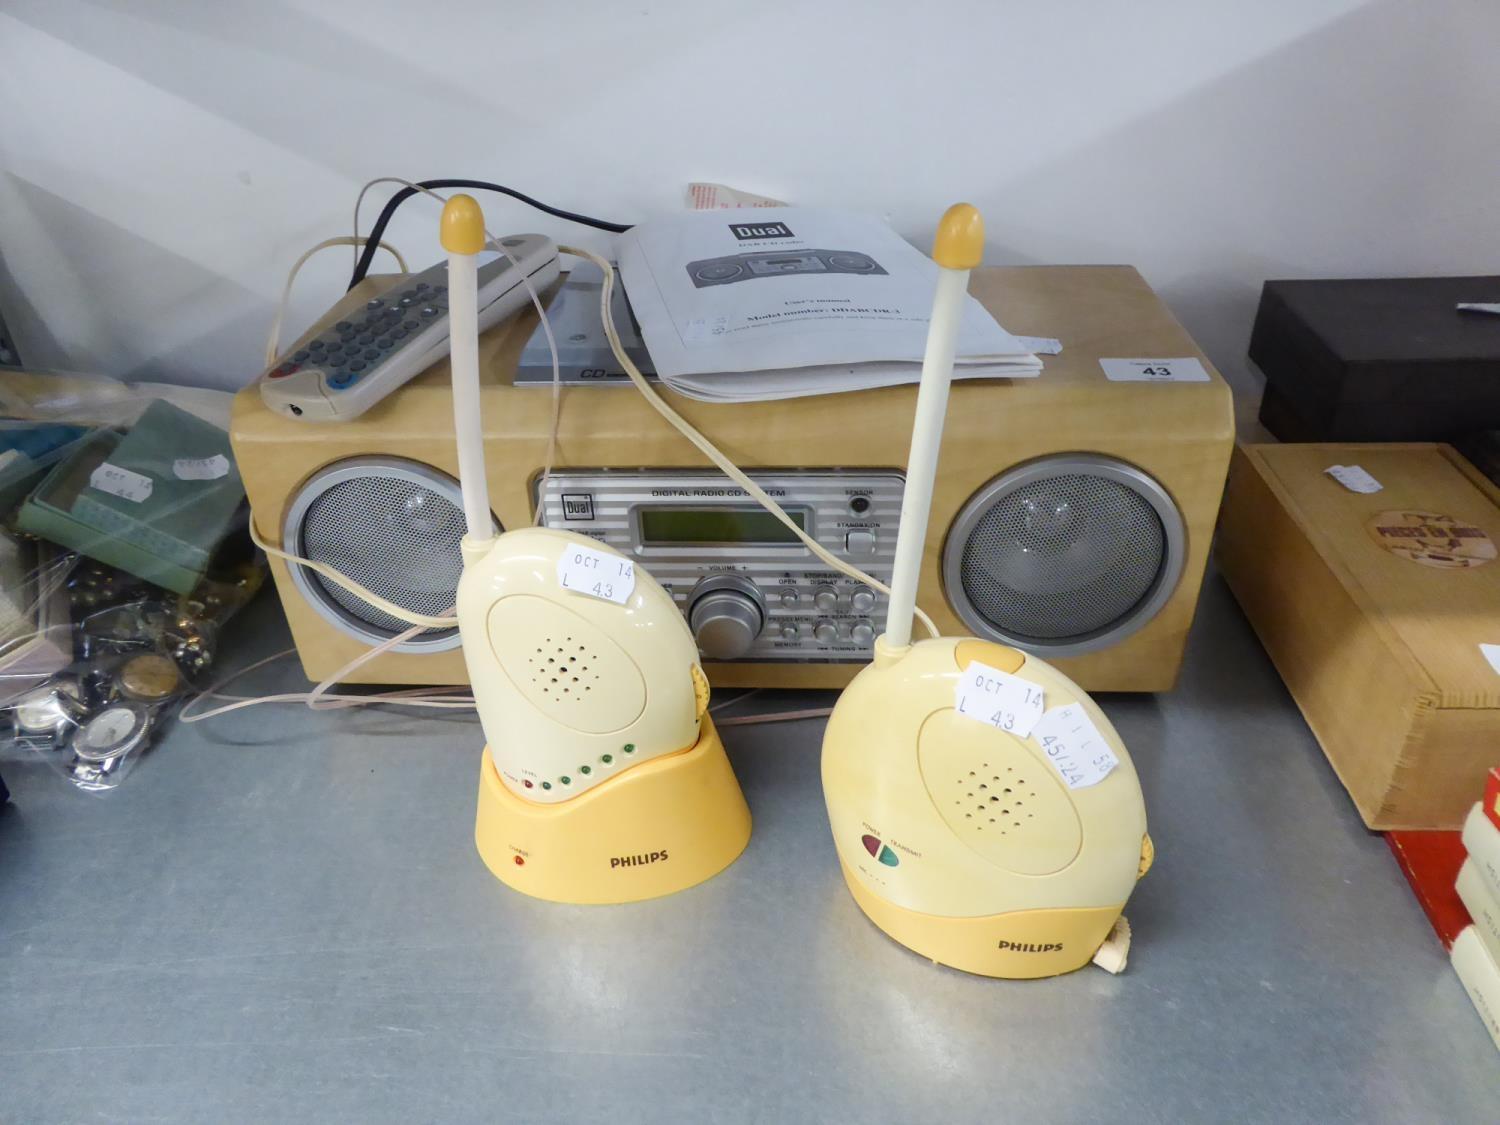 A DUAL DIGITAL RADIO AND CD PLAYER AND A PAIR OF INTERCOM BABY MONITORS